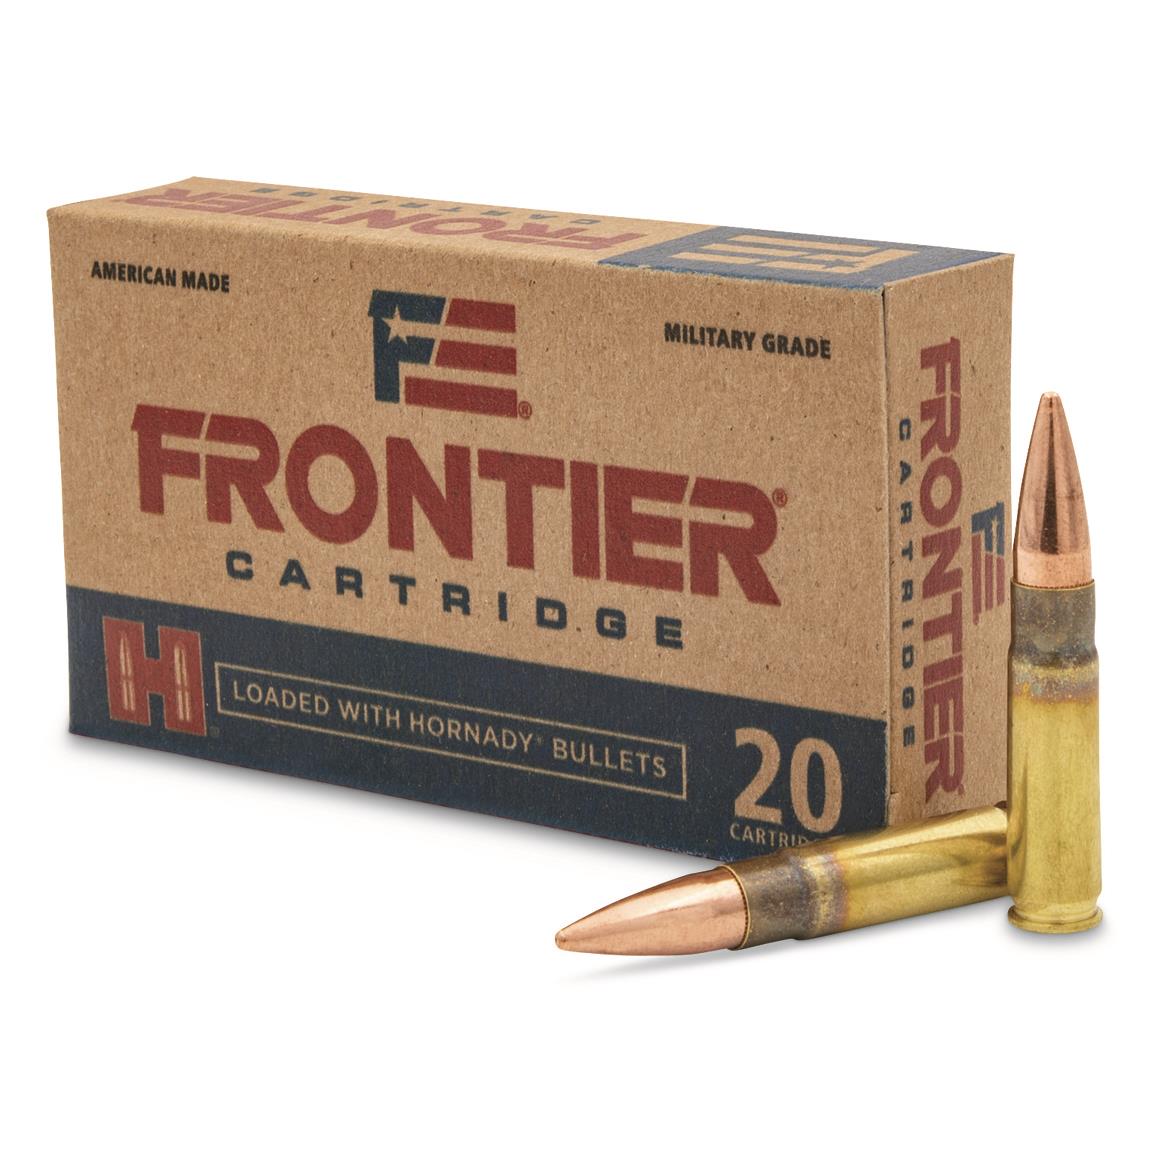 Hornady Frontier Cartridge, .300 AAC Blackout, FMJ, 125 Grain, 20 Rounds